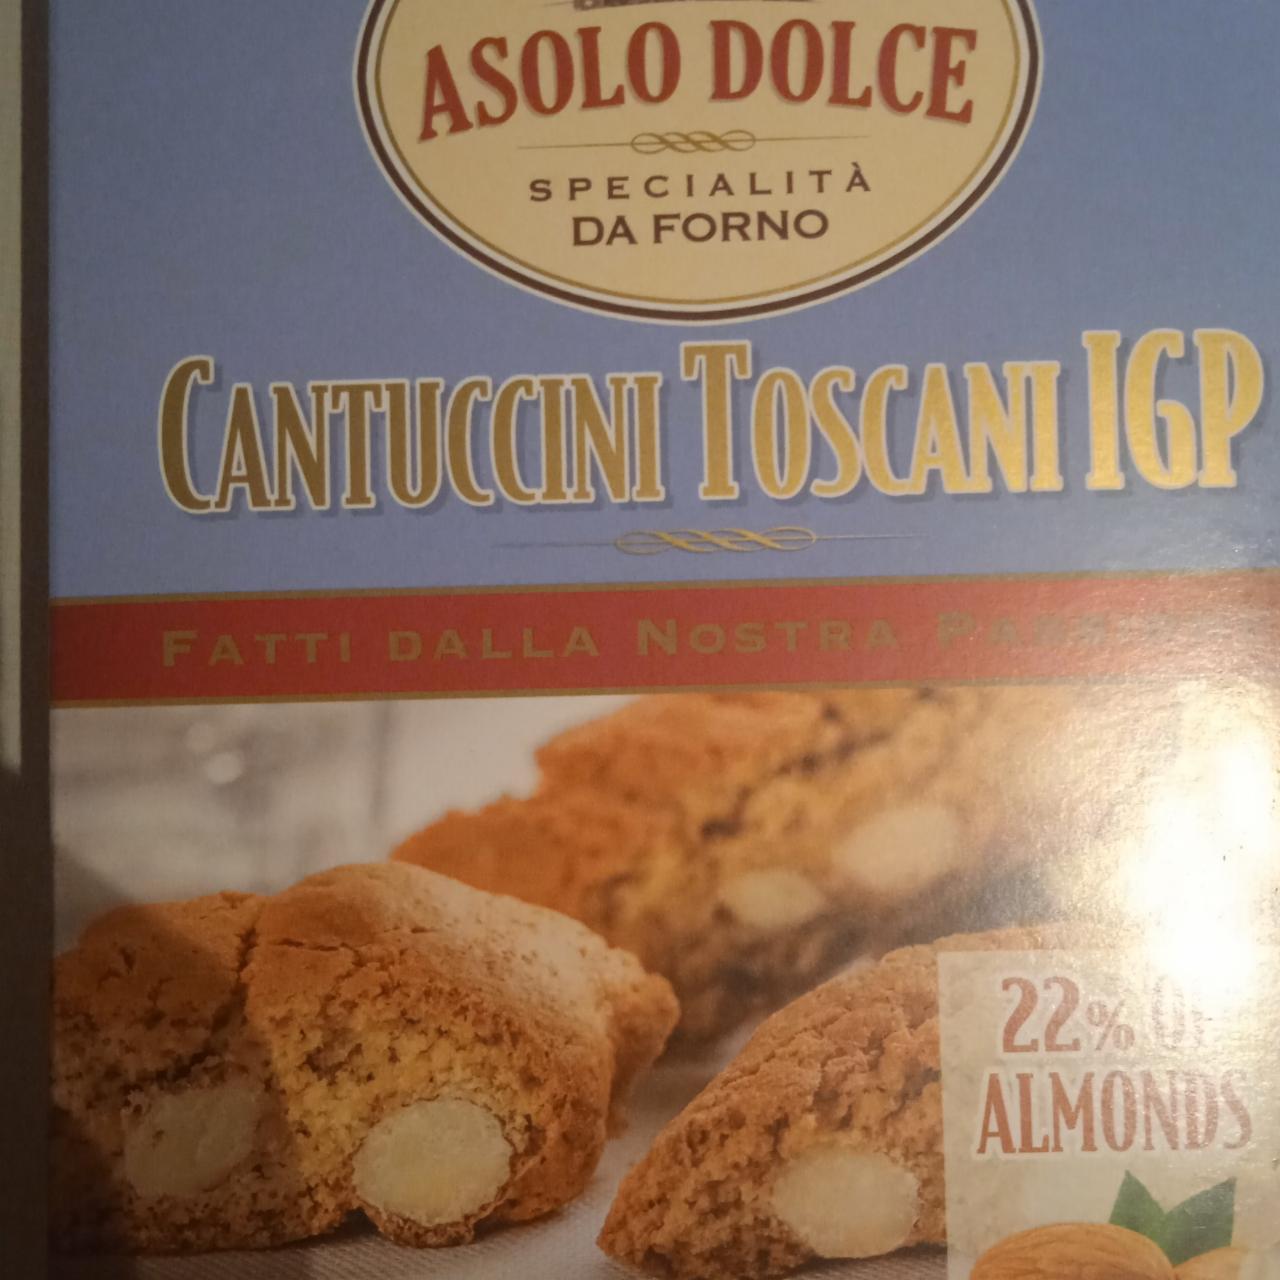 Фото - Cantuccini Toskani IGP Asolo Dolce